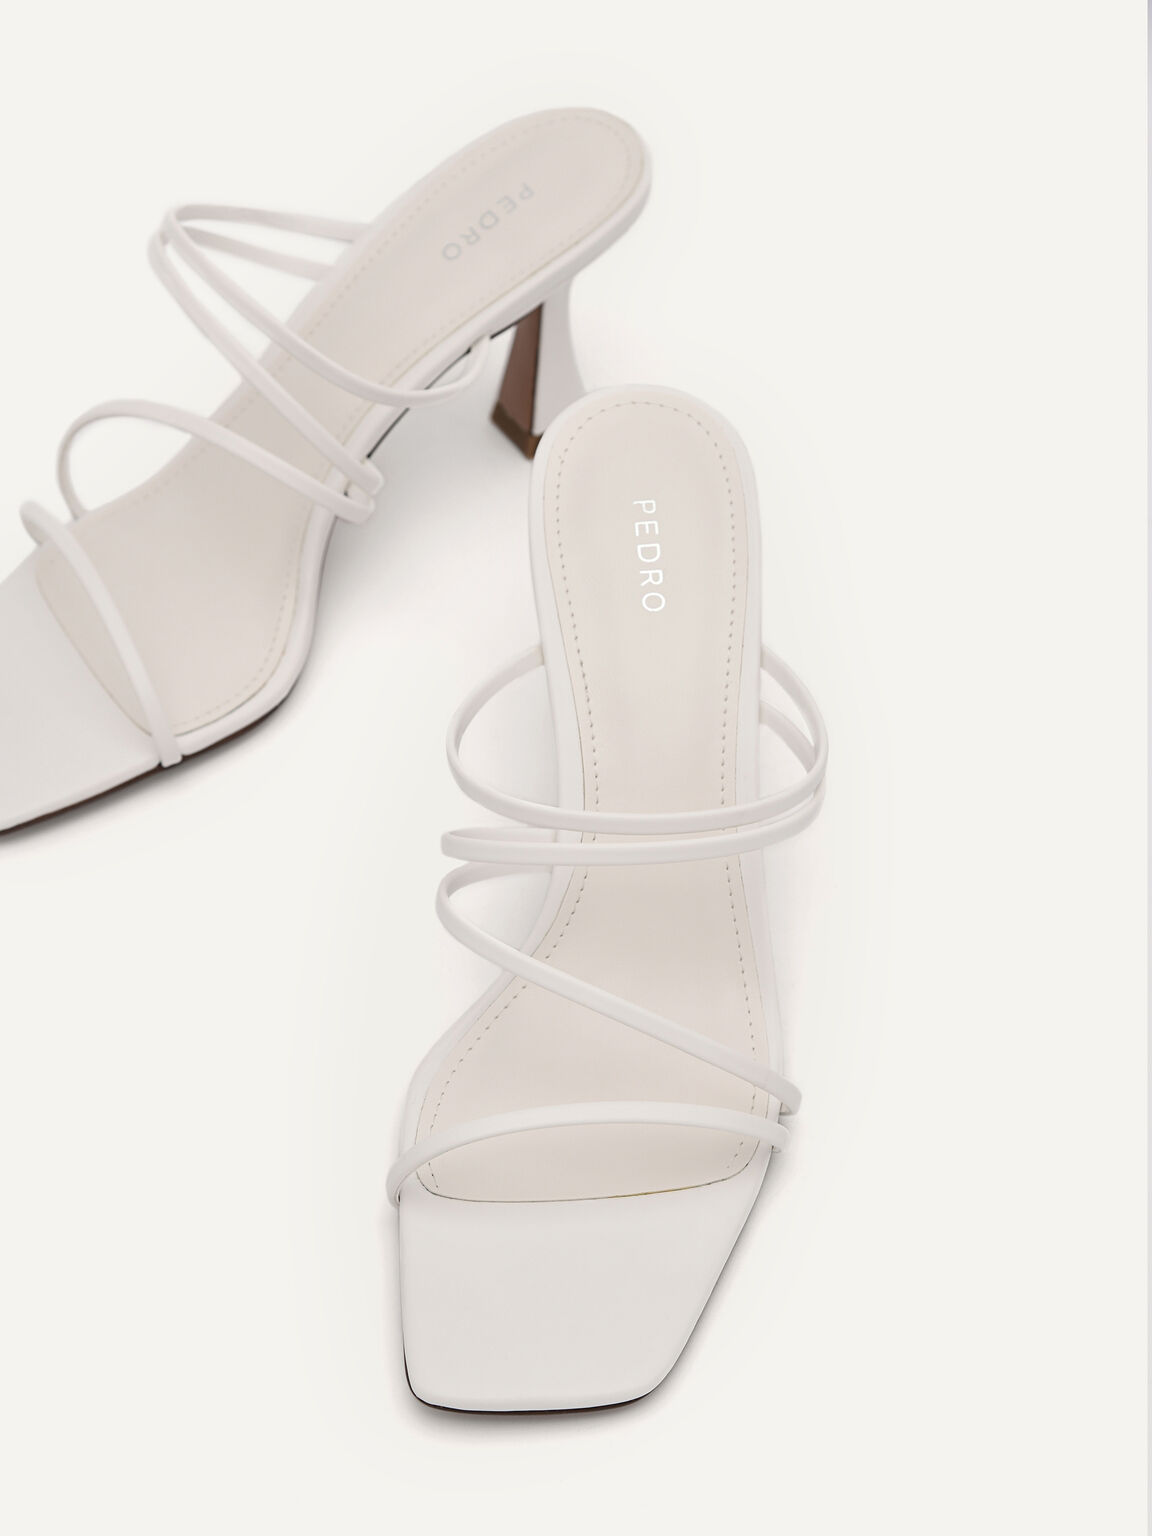 Strappy Heeled Sandals - White, White